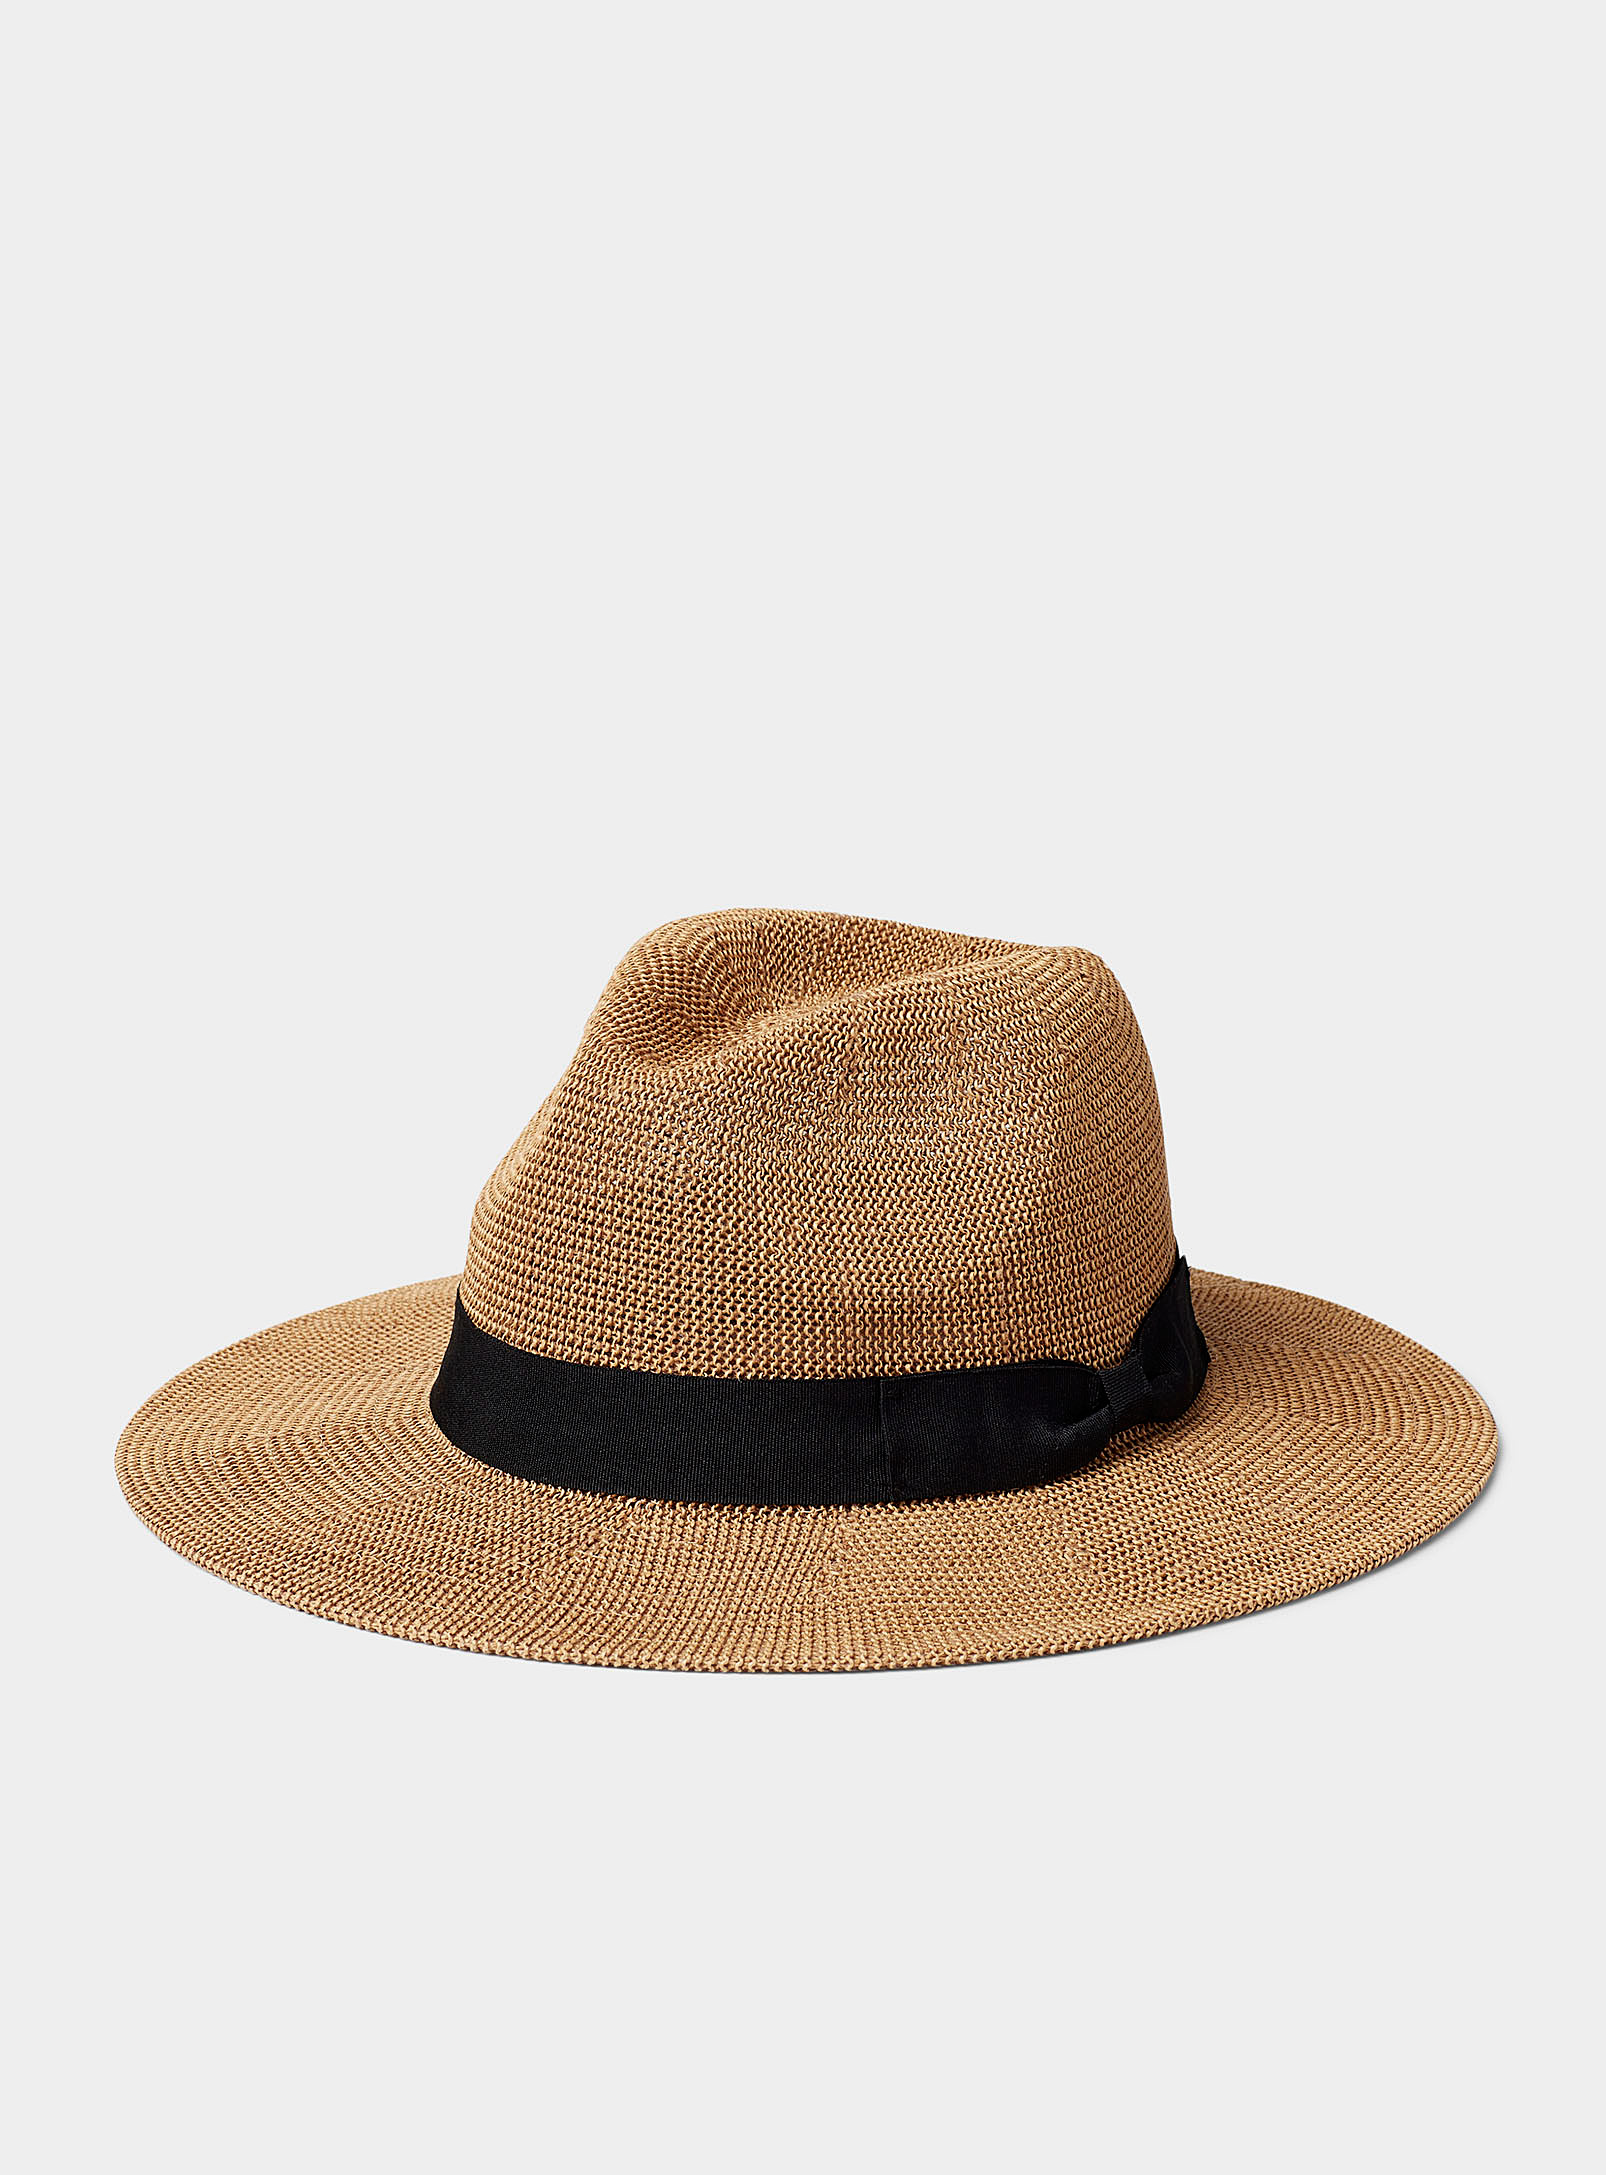 Le 31 - Men's Black-band straw Panama hat